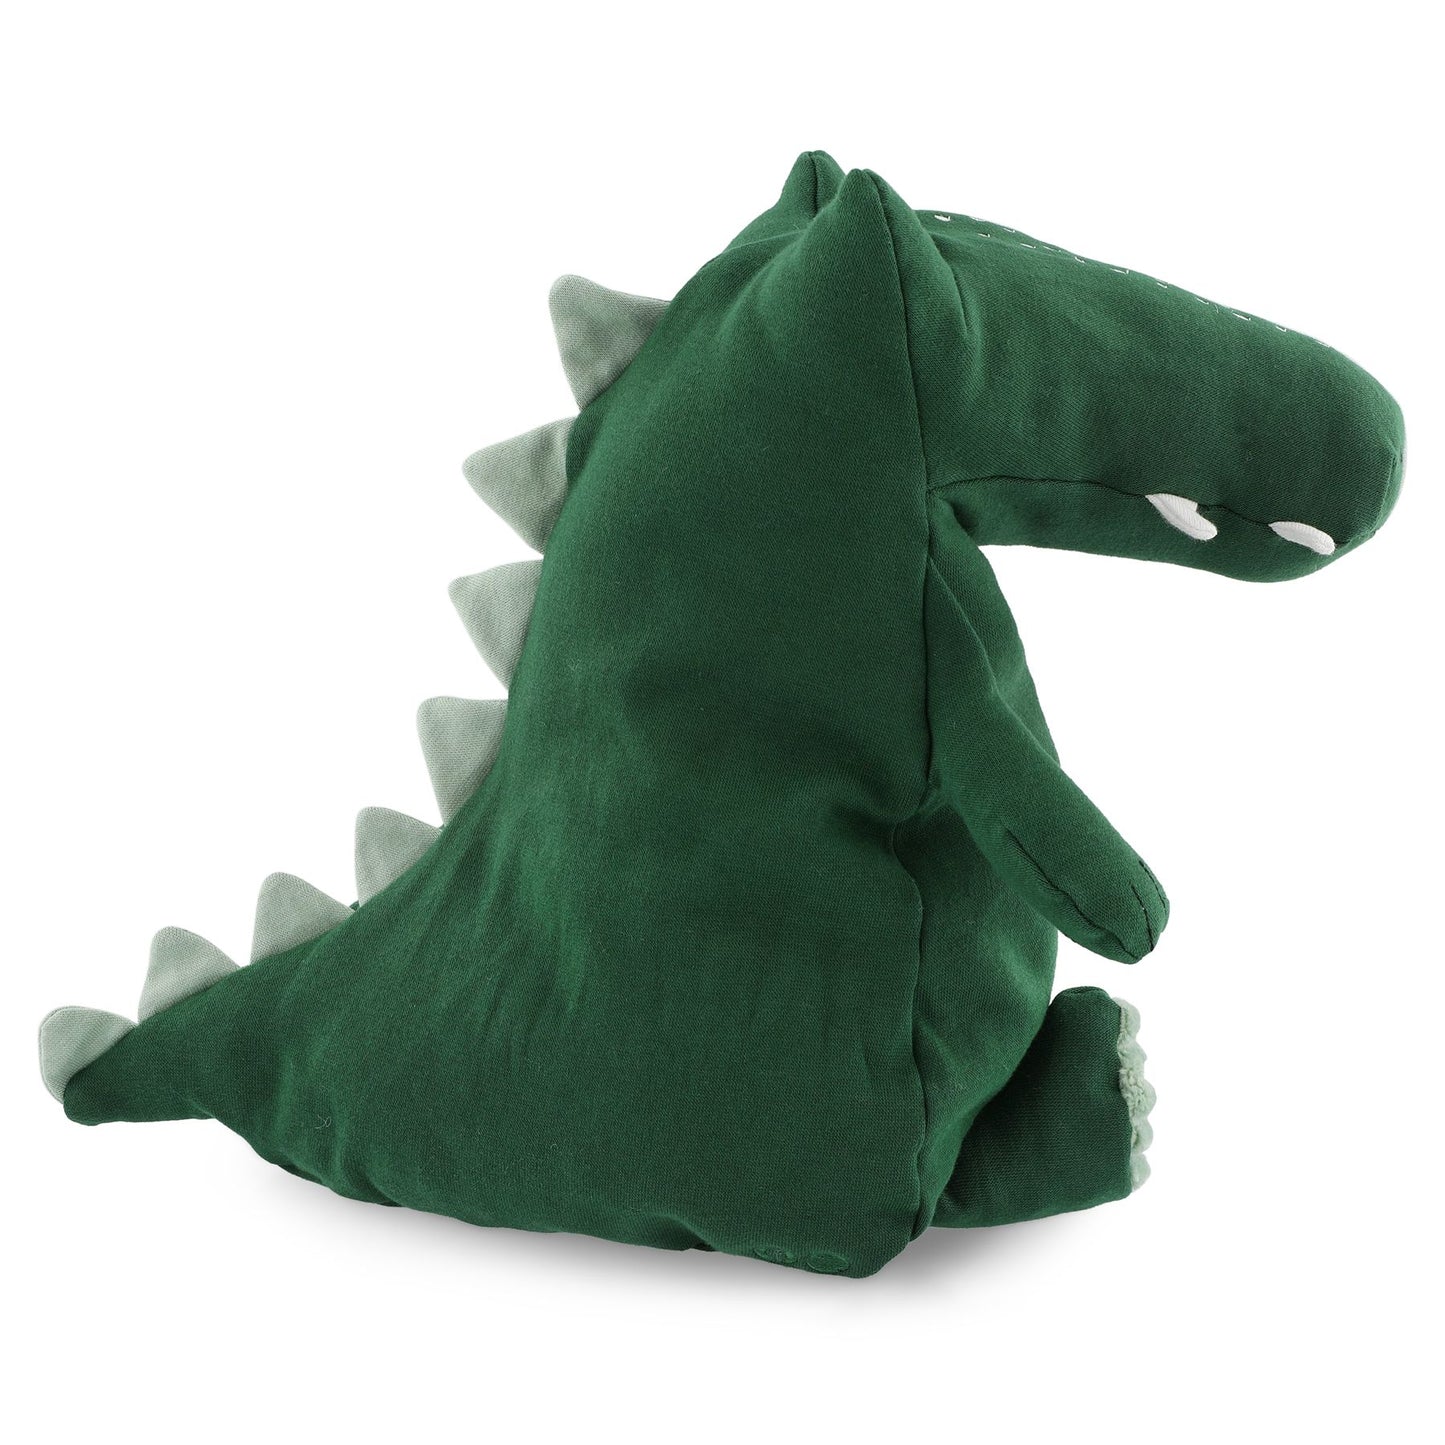 Trixie Plush Toy Large - Mr Crocodile